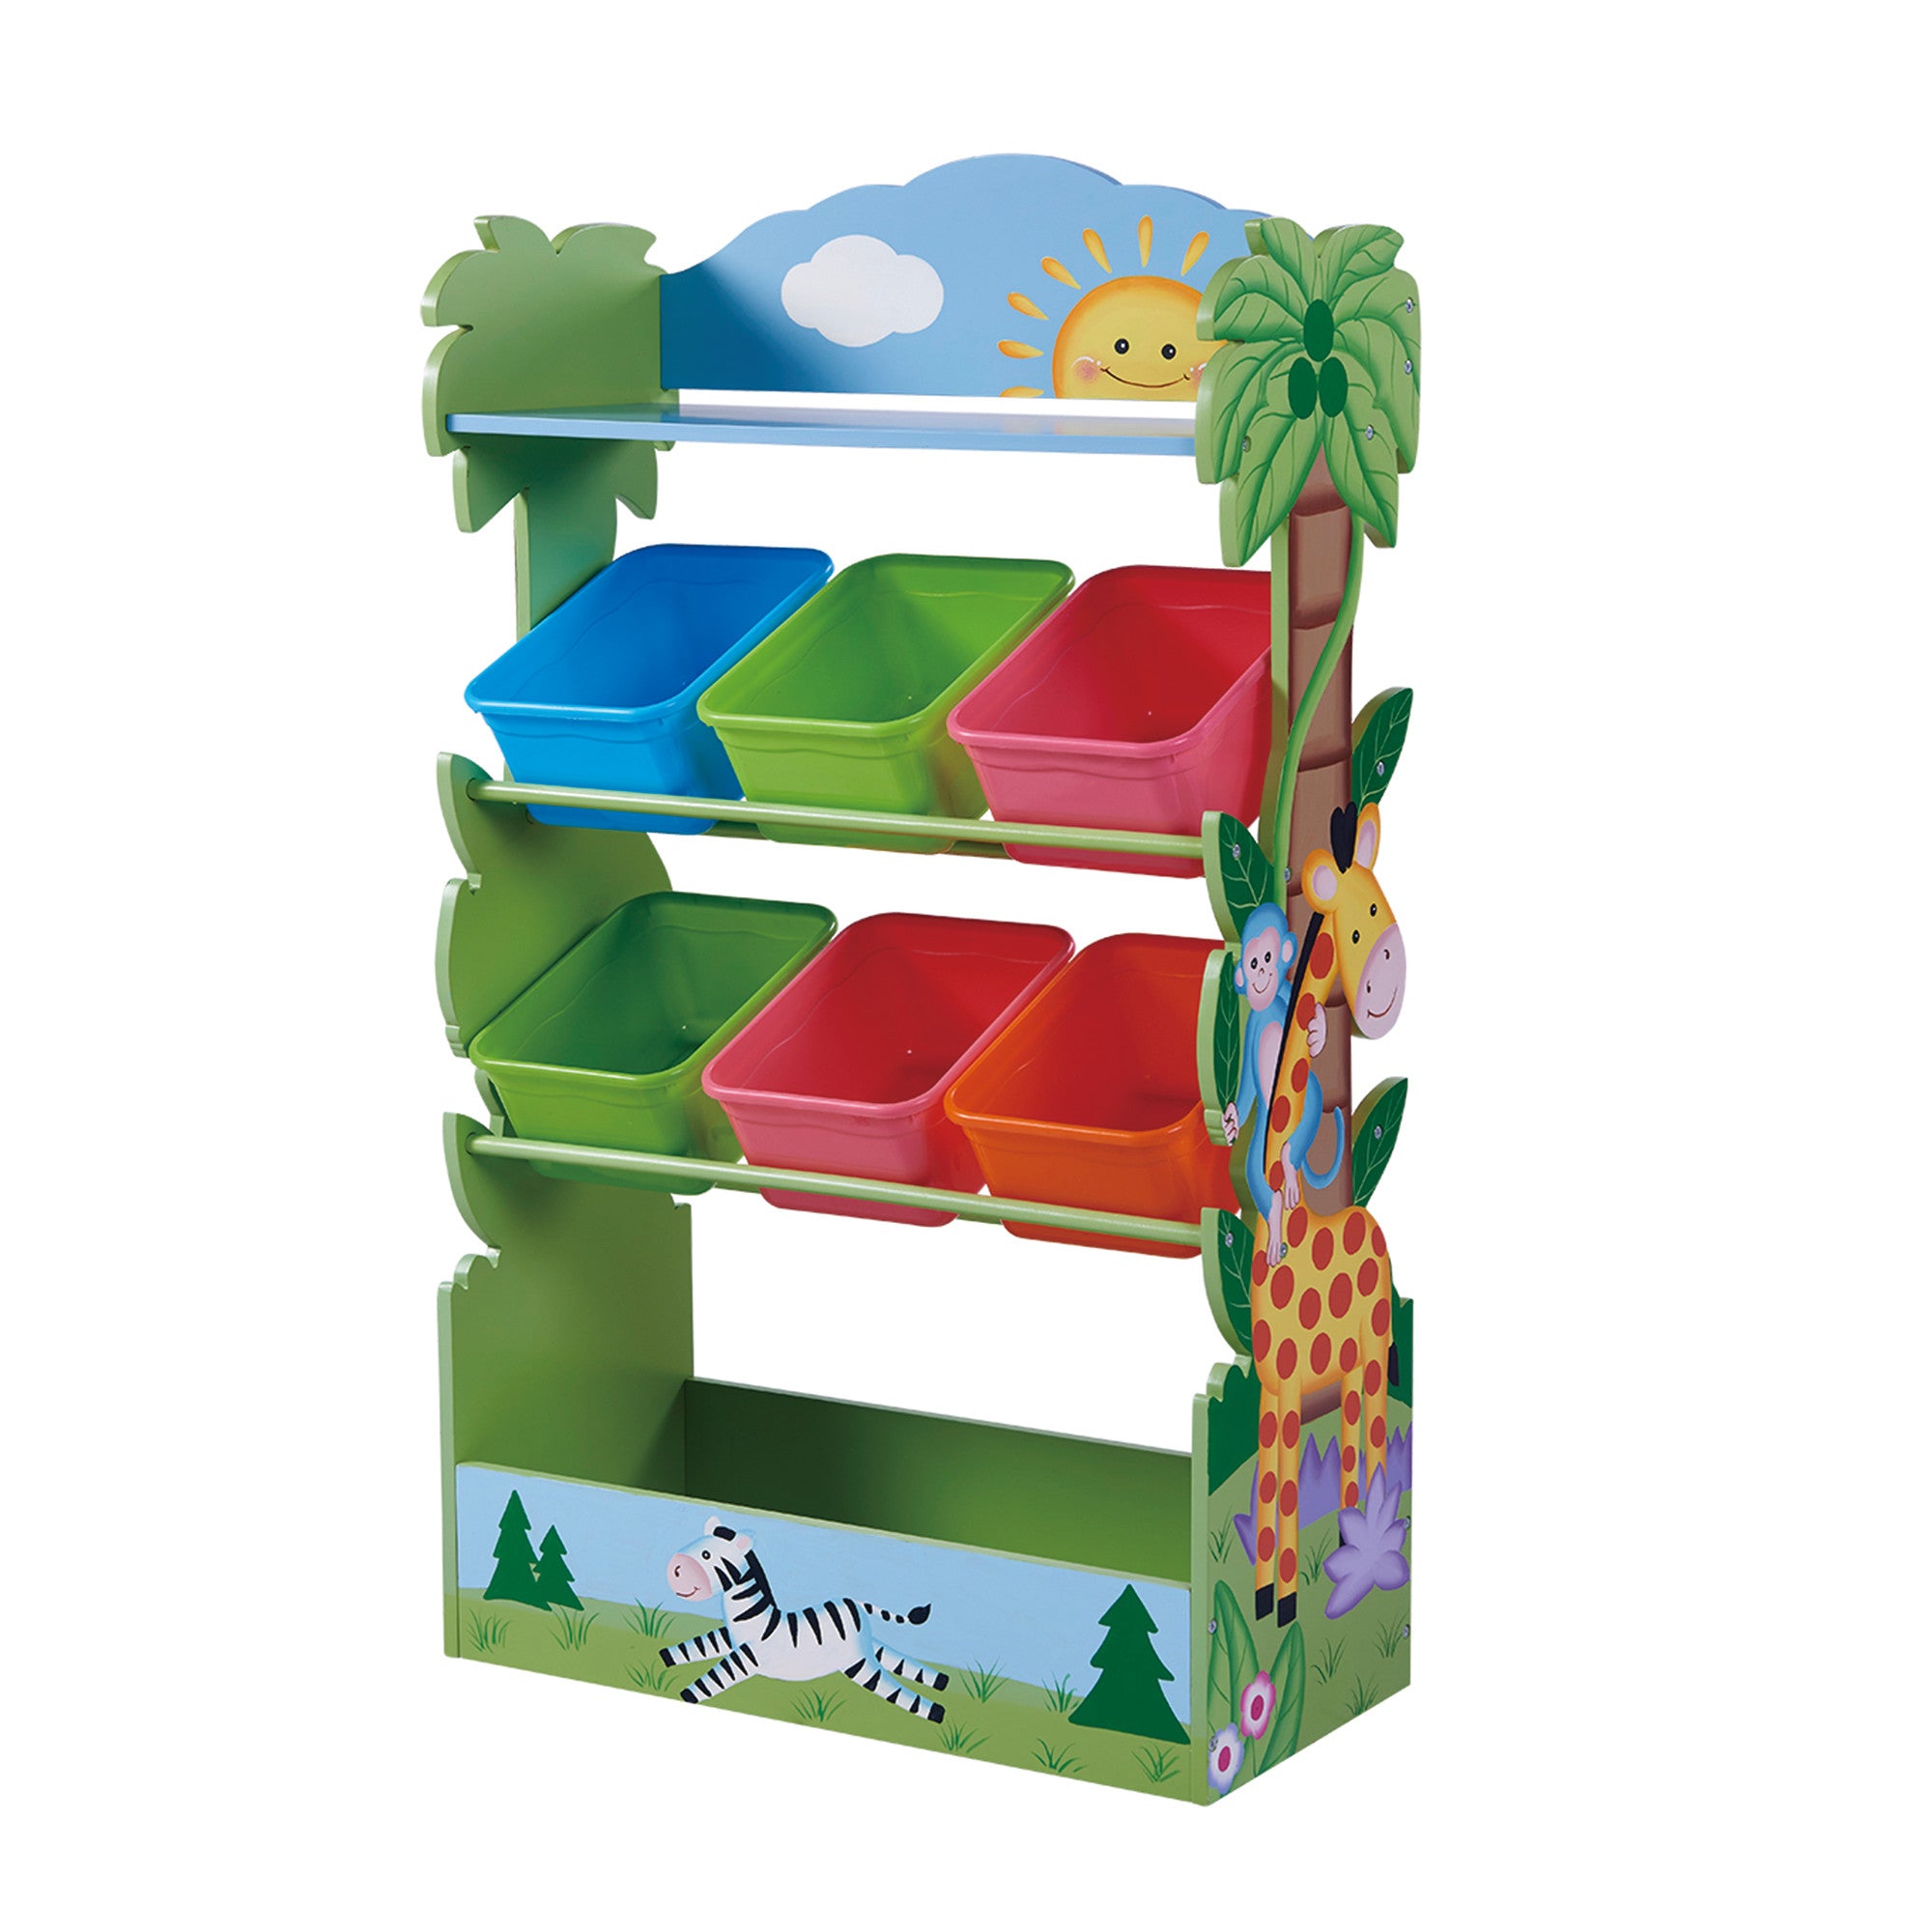 Fantasy Fields Sunny Safari Kids Wooden Toy Organizer with Storage Bins, Blue/Green